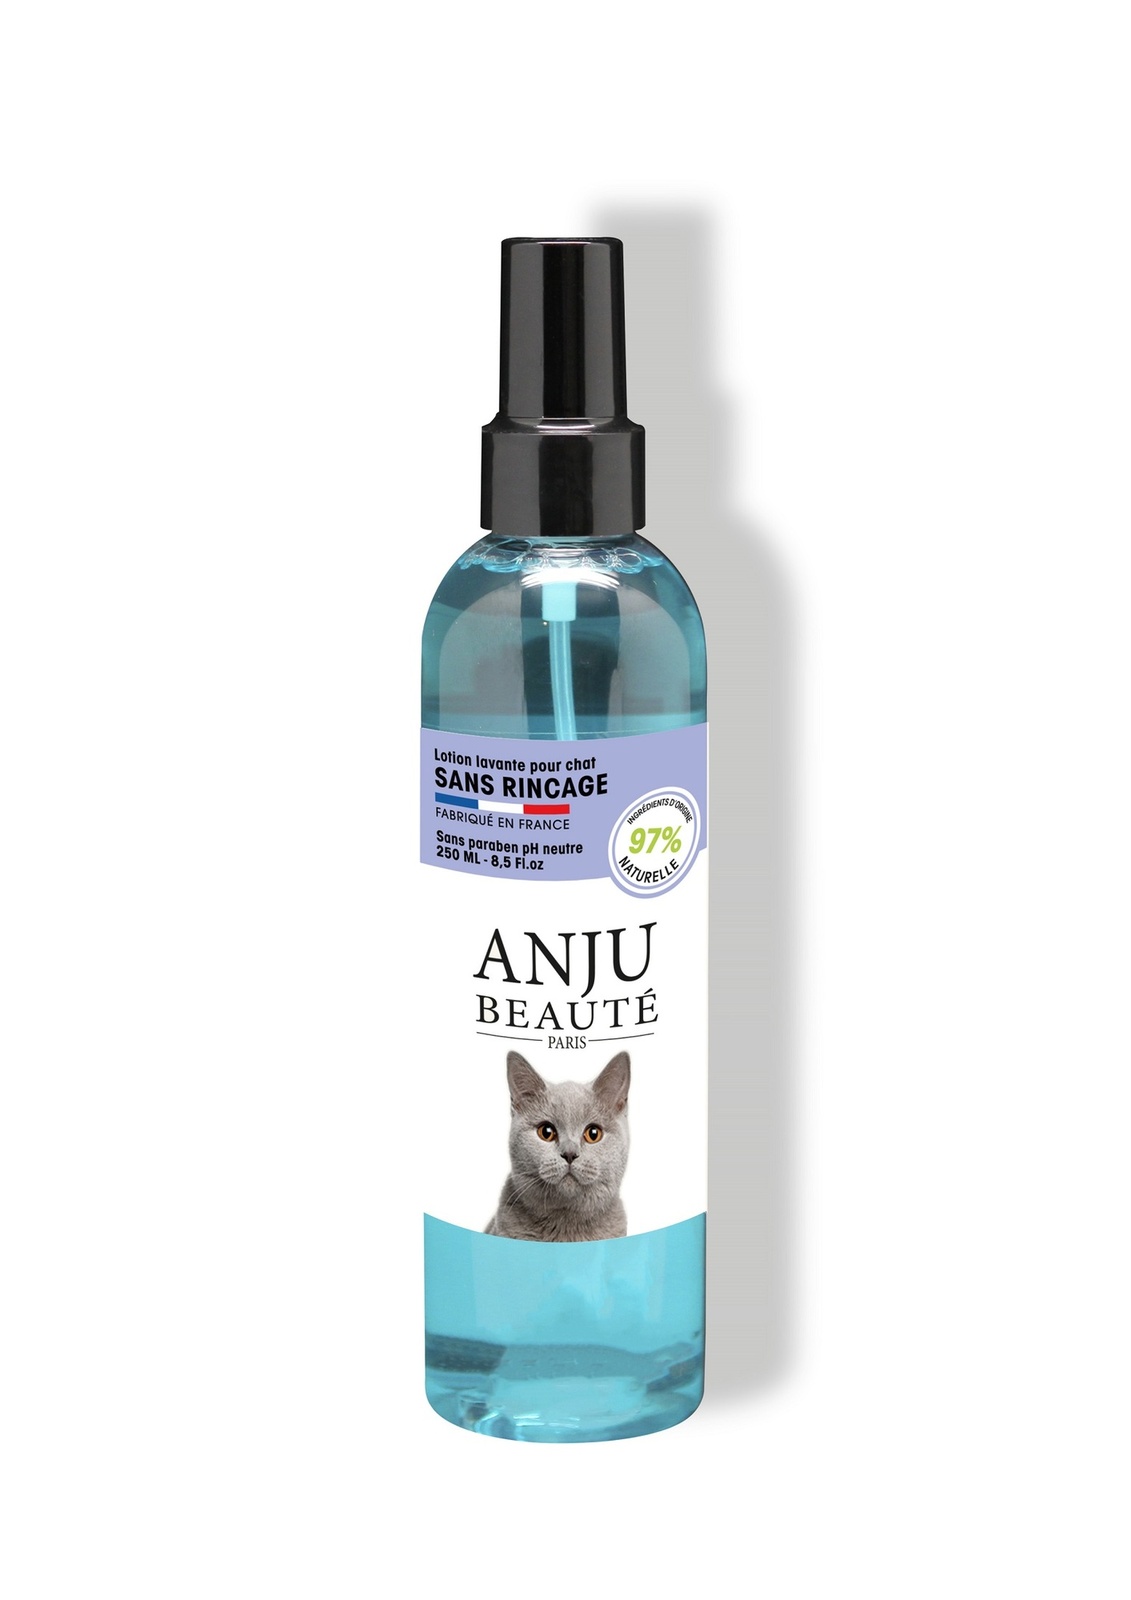 Anju Beaute Anju Beaute очищаяющий спрей для кошек без ополаскивания, 250 мл (250 г) anju beaute anju beaute спрей для кошек для распутывания шерсти 250 мл 250 г